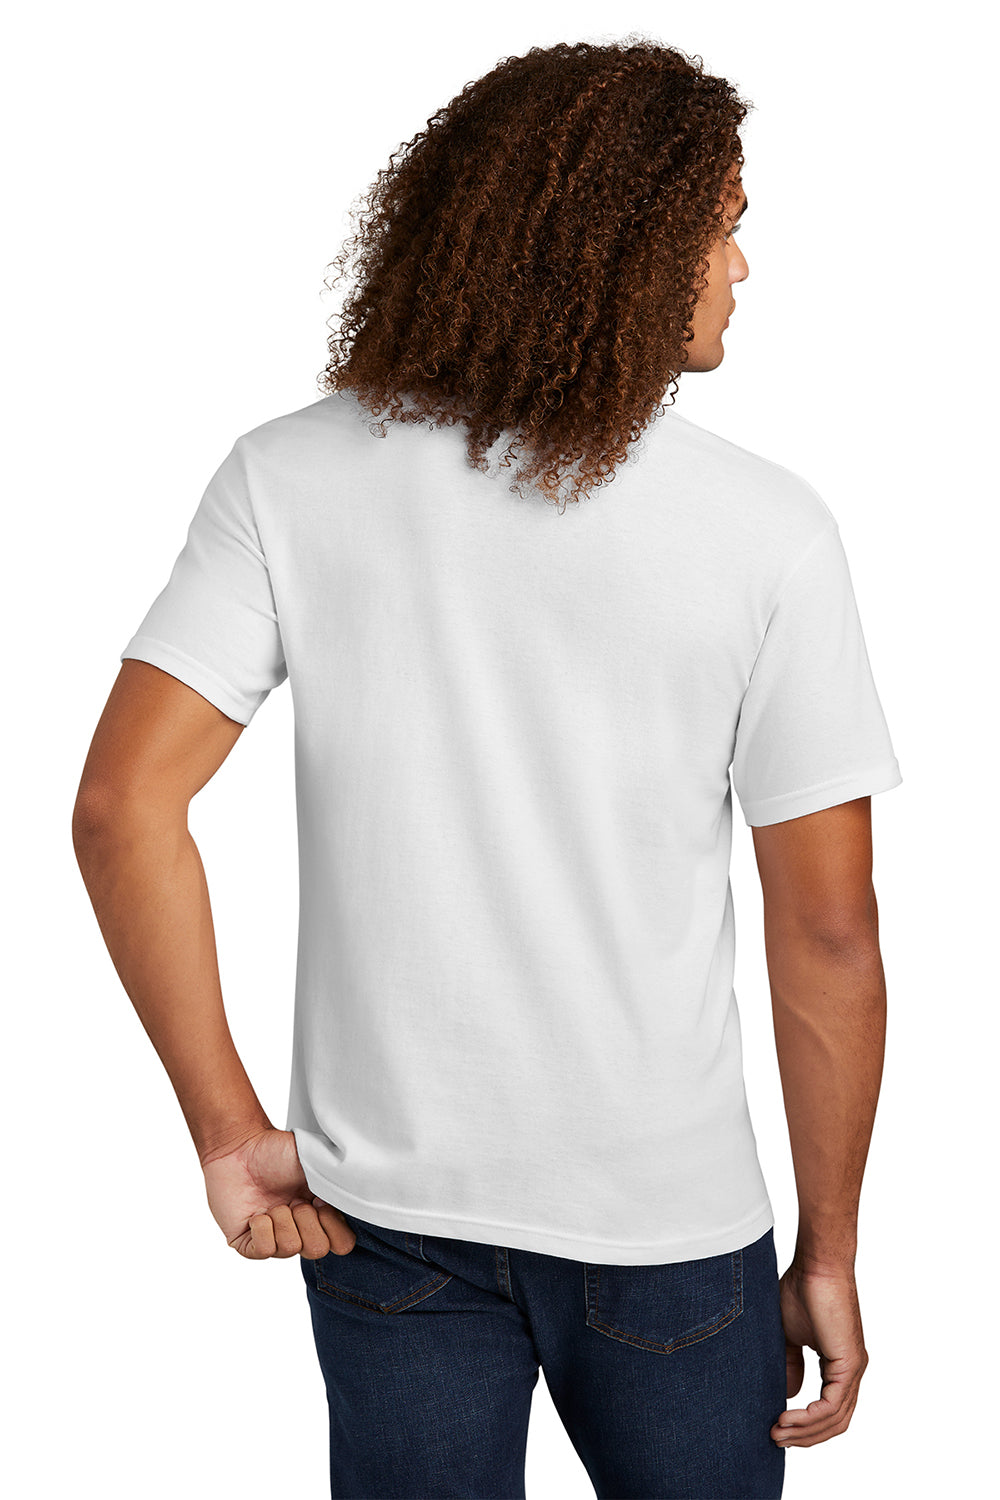 American Apparel 1301/AL1301 Mens Short Sleeve Crewneck T-Shirt White Model Back